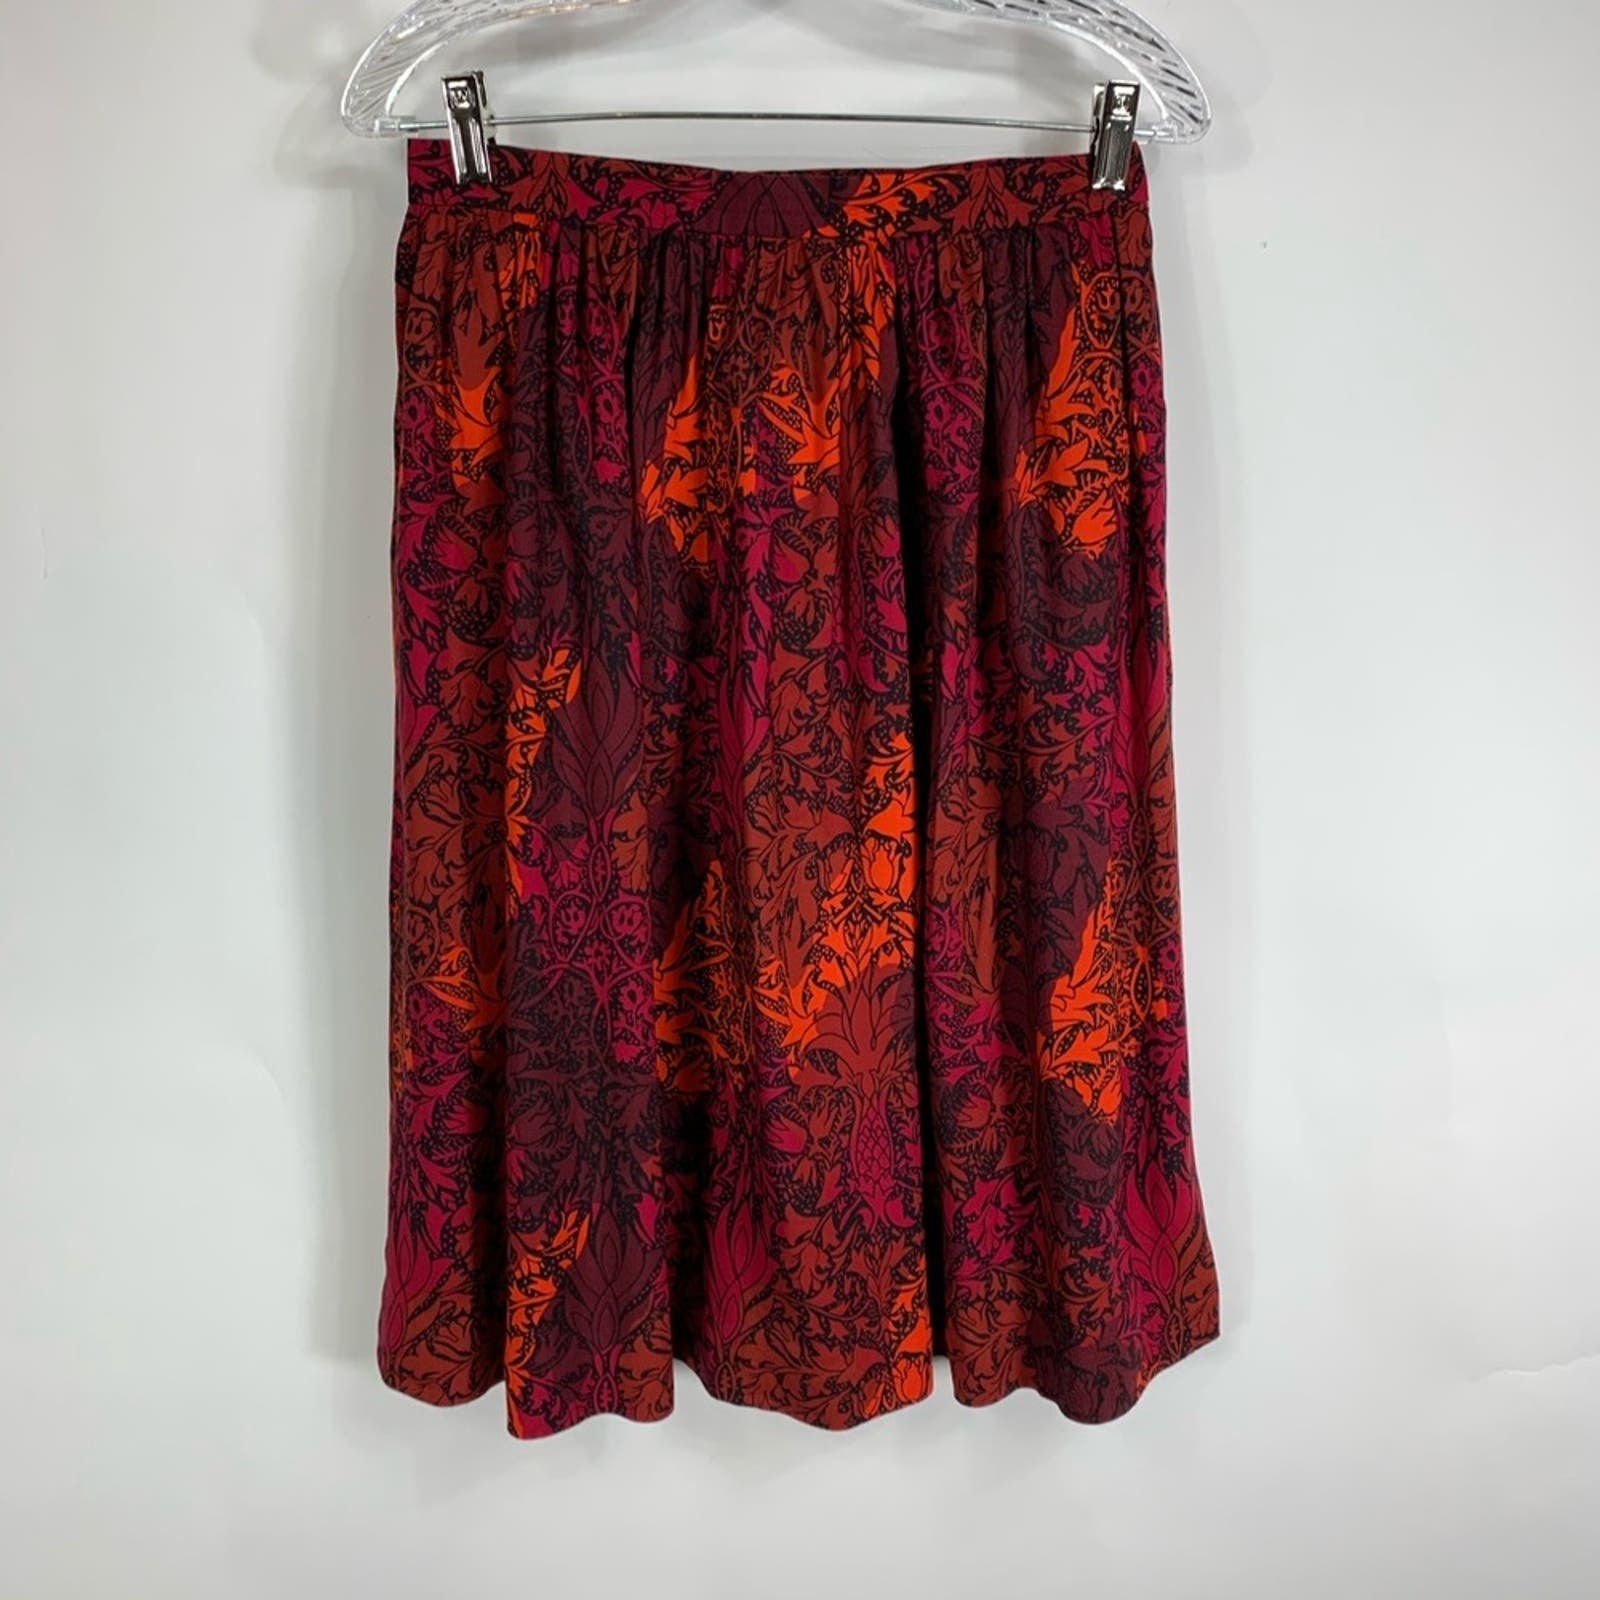 large selection Handmade Rayon Flowy Red Pattern Midi Skirt Small Iu8Ms6PVA Online Shop